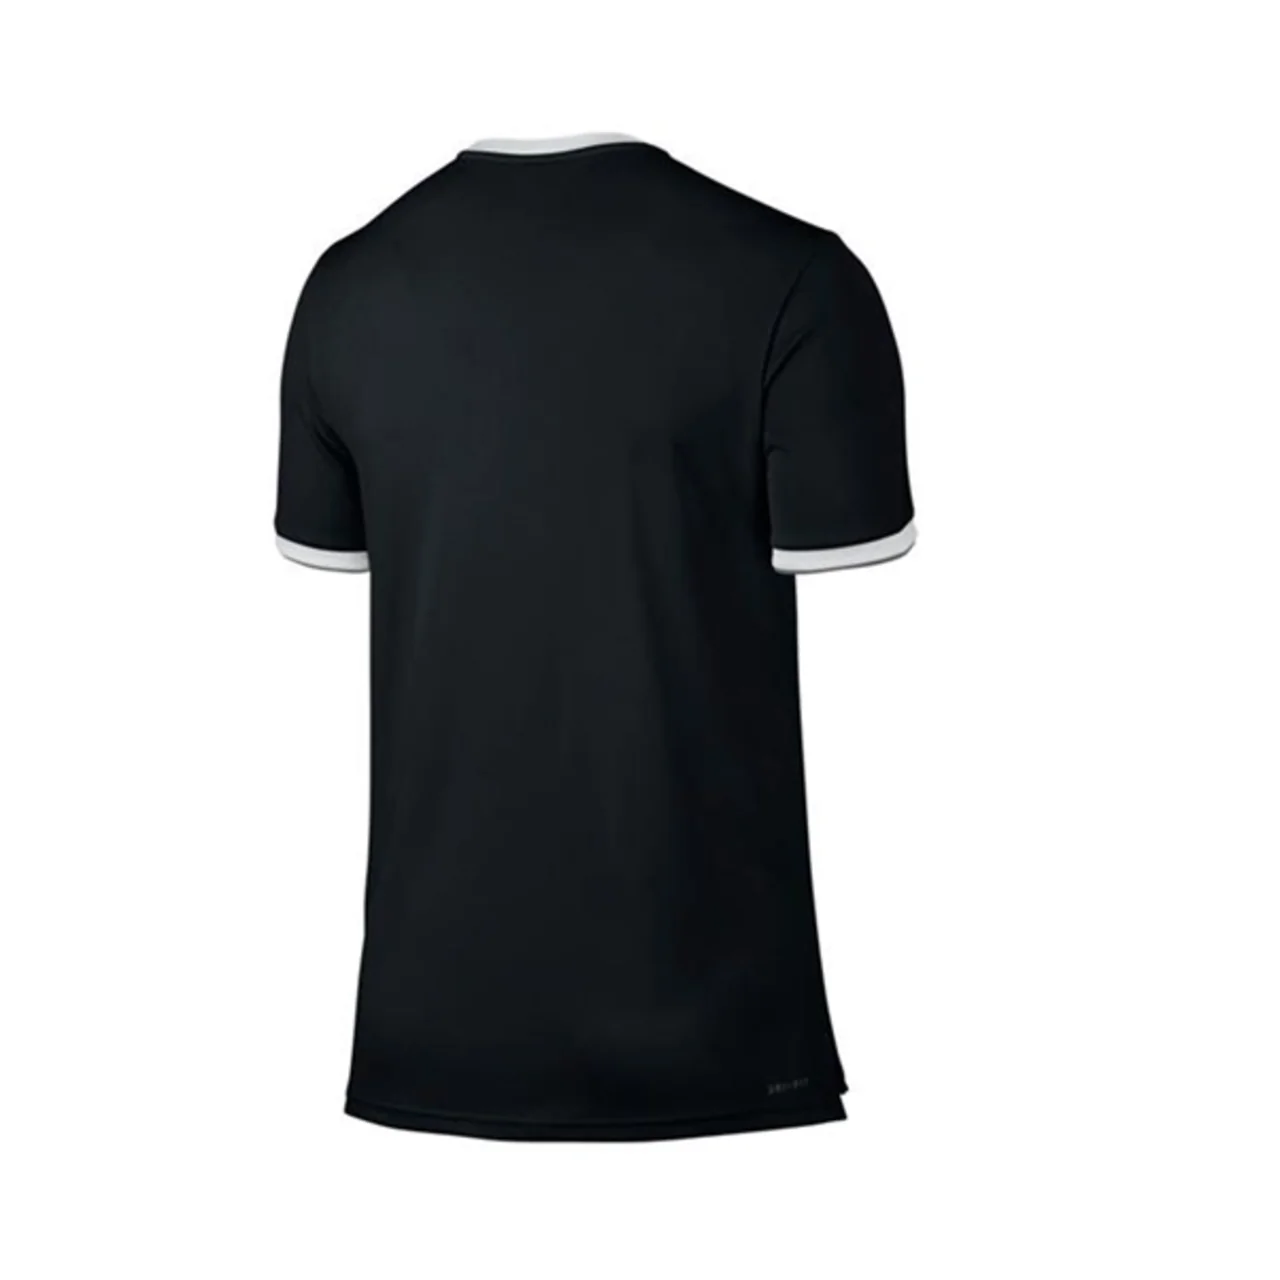 Nike Dry Top Team Black/White Size L